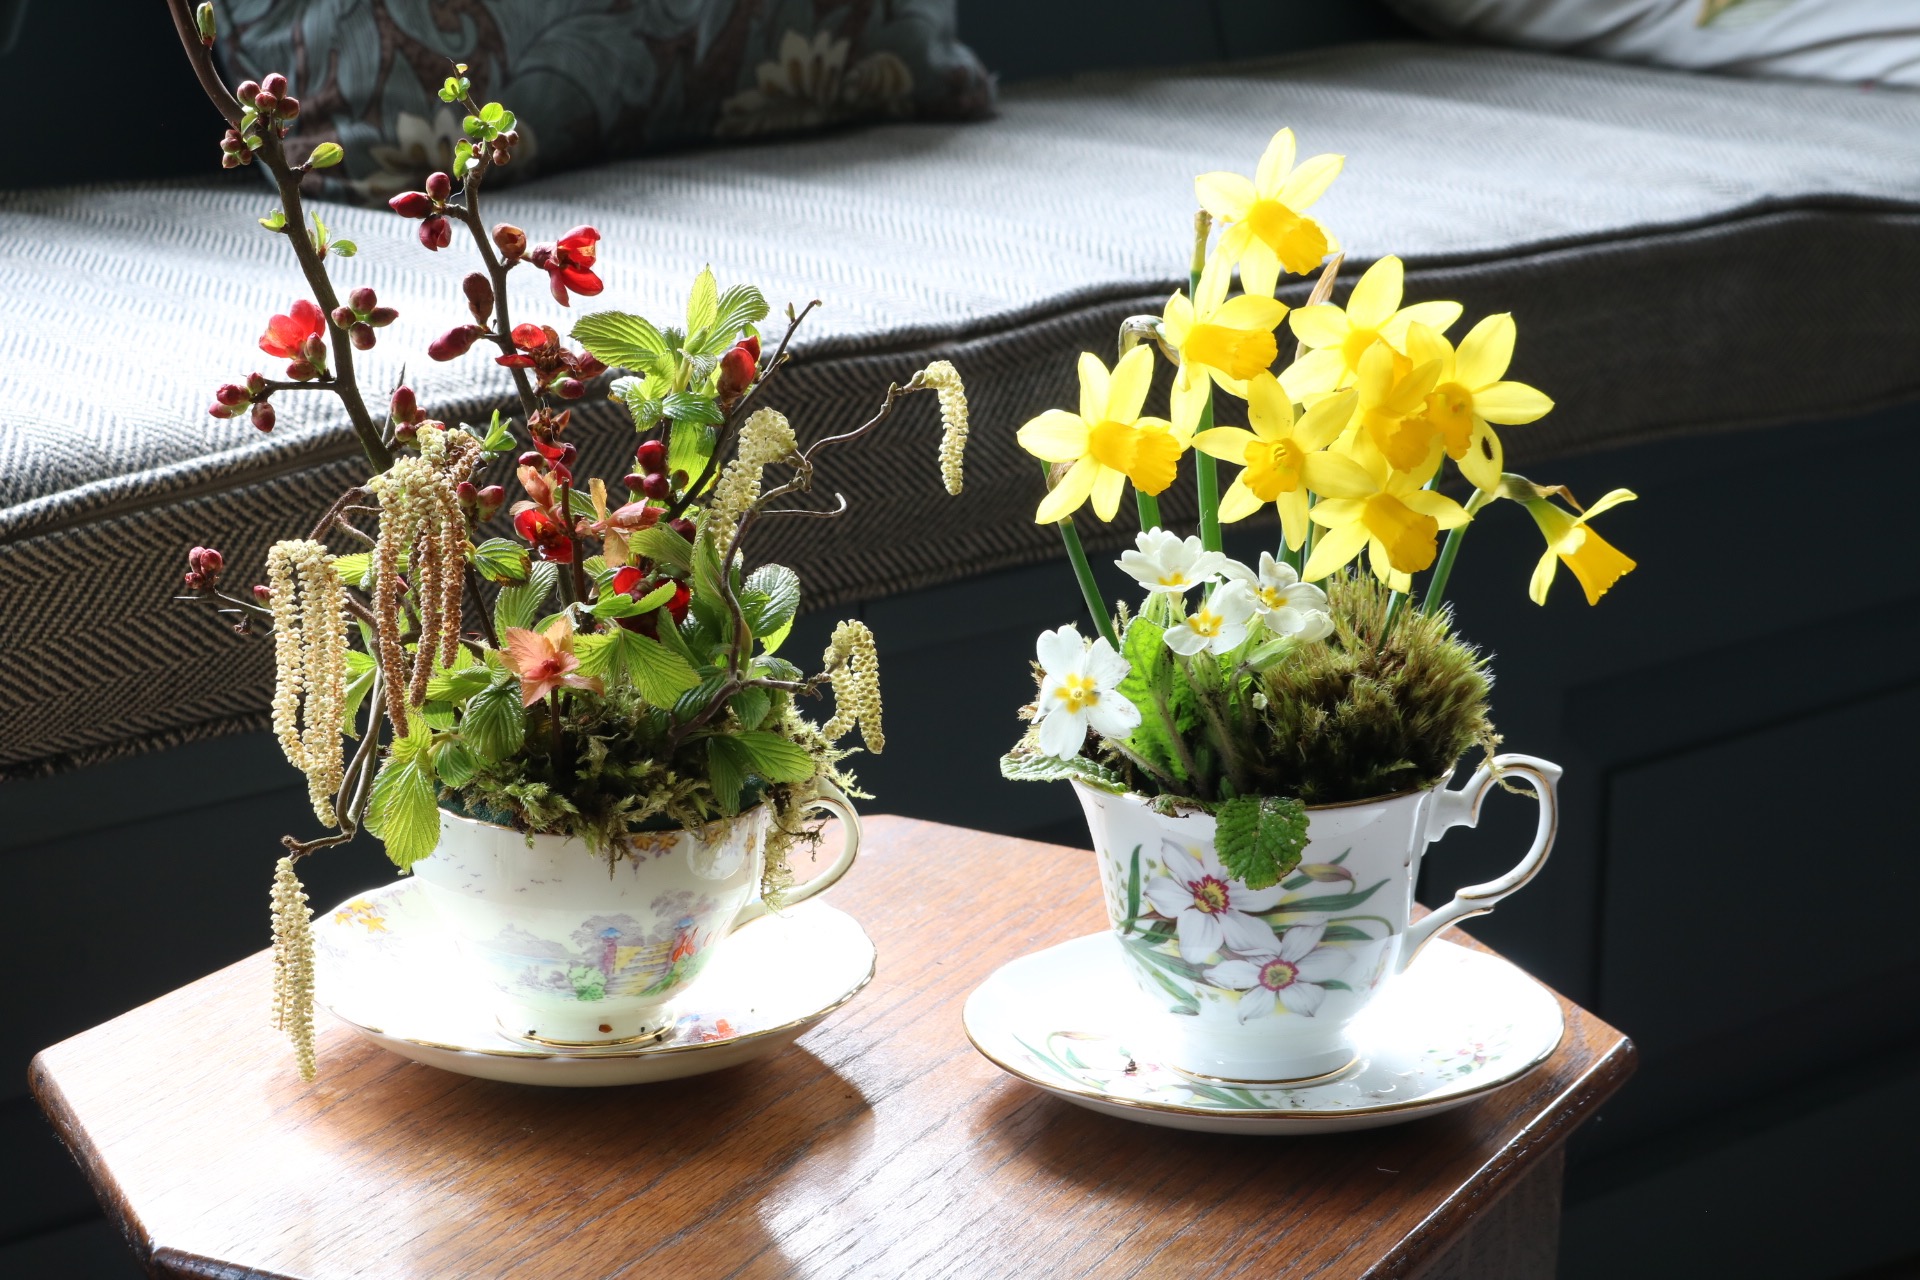 Tea cup flower arrangements